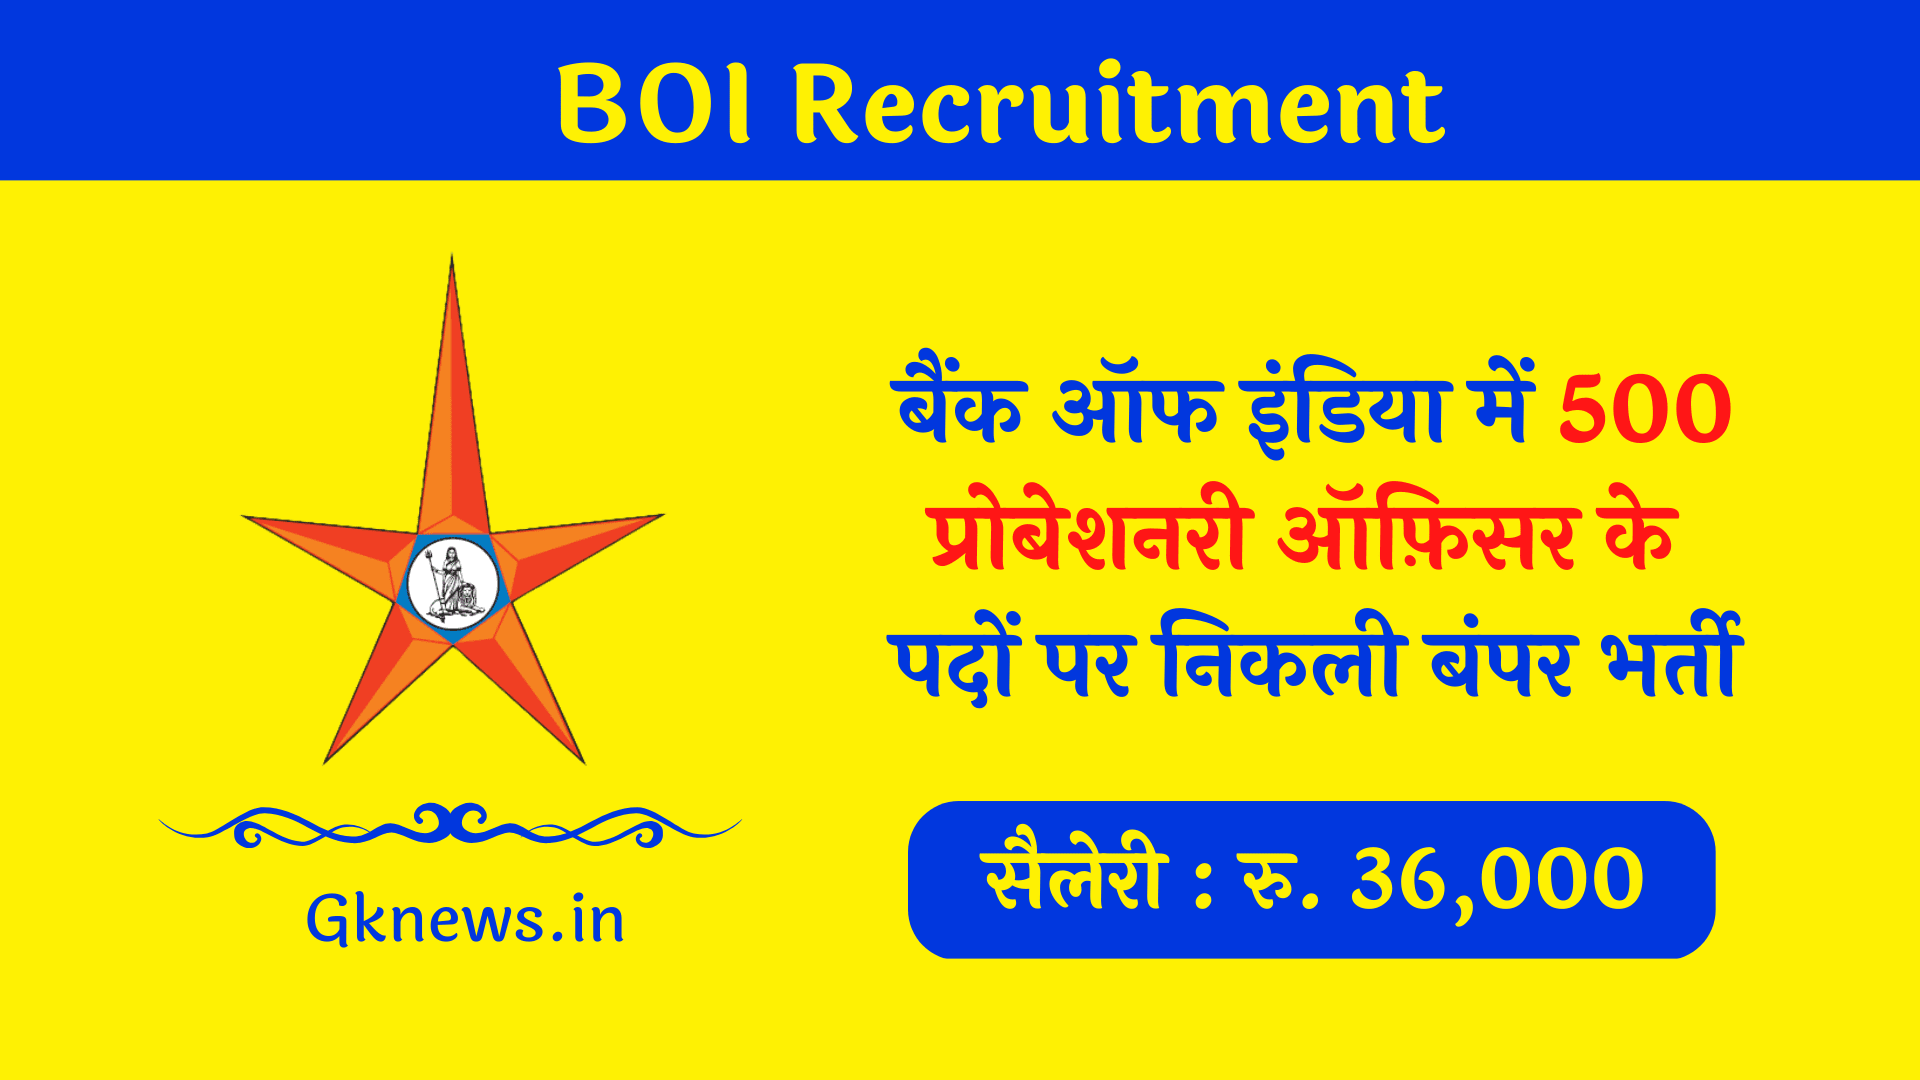 Bank of India PO Recruitment 2023